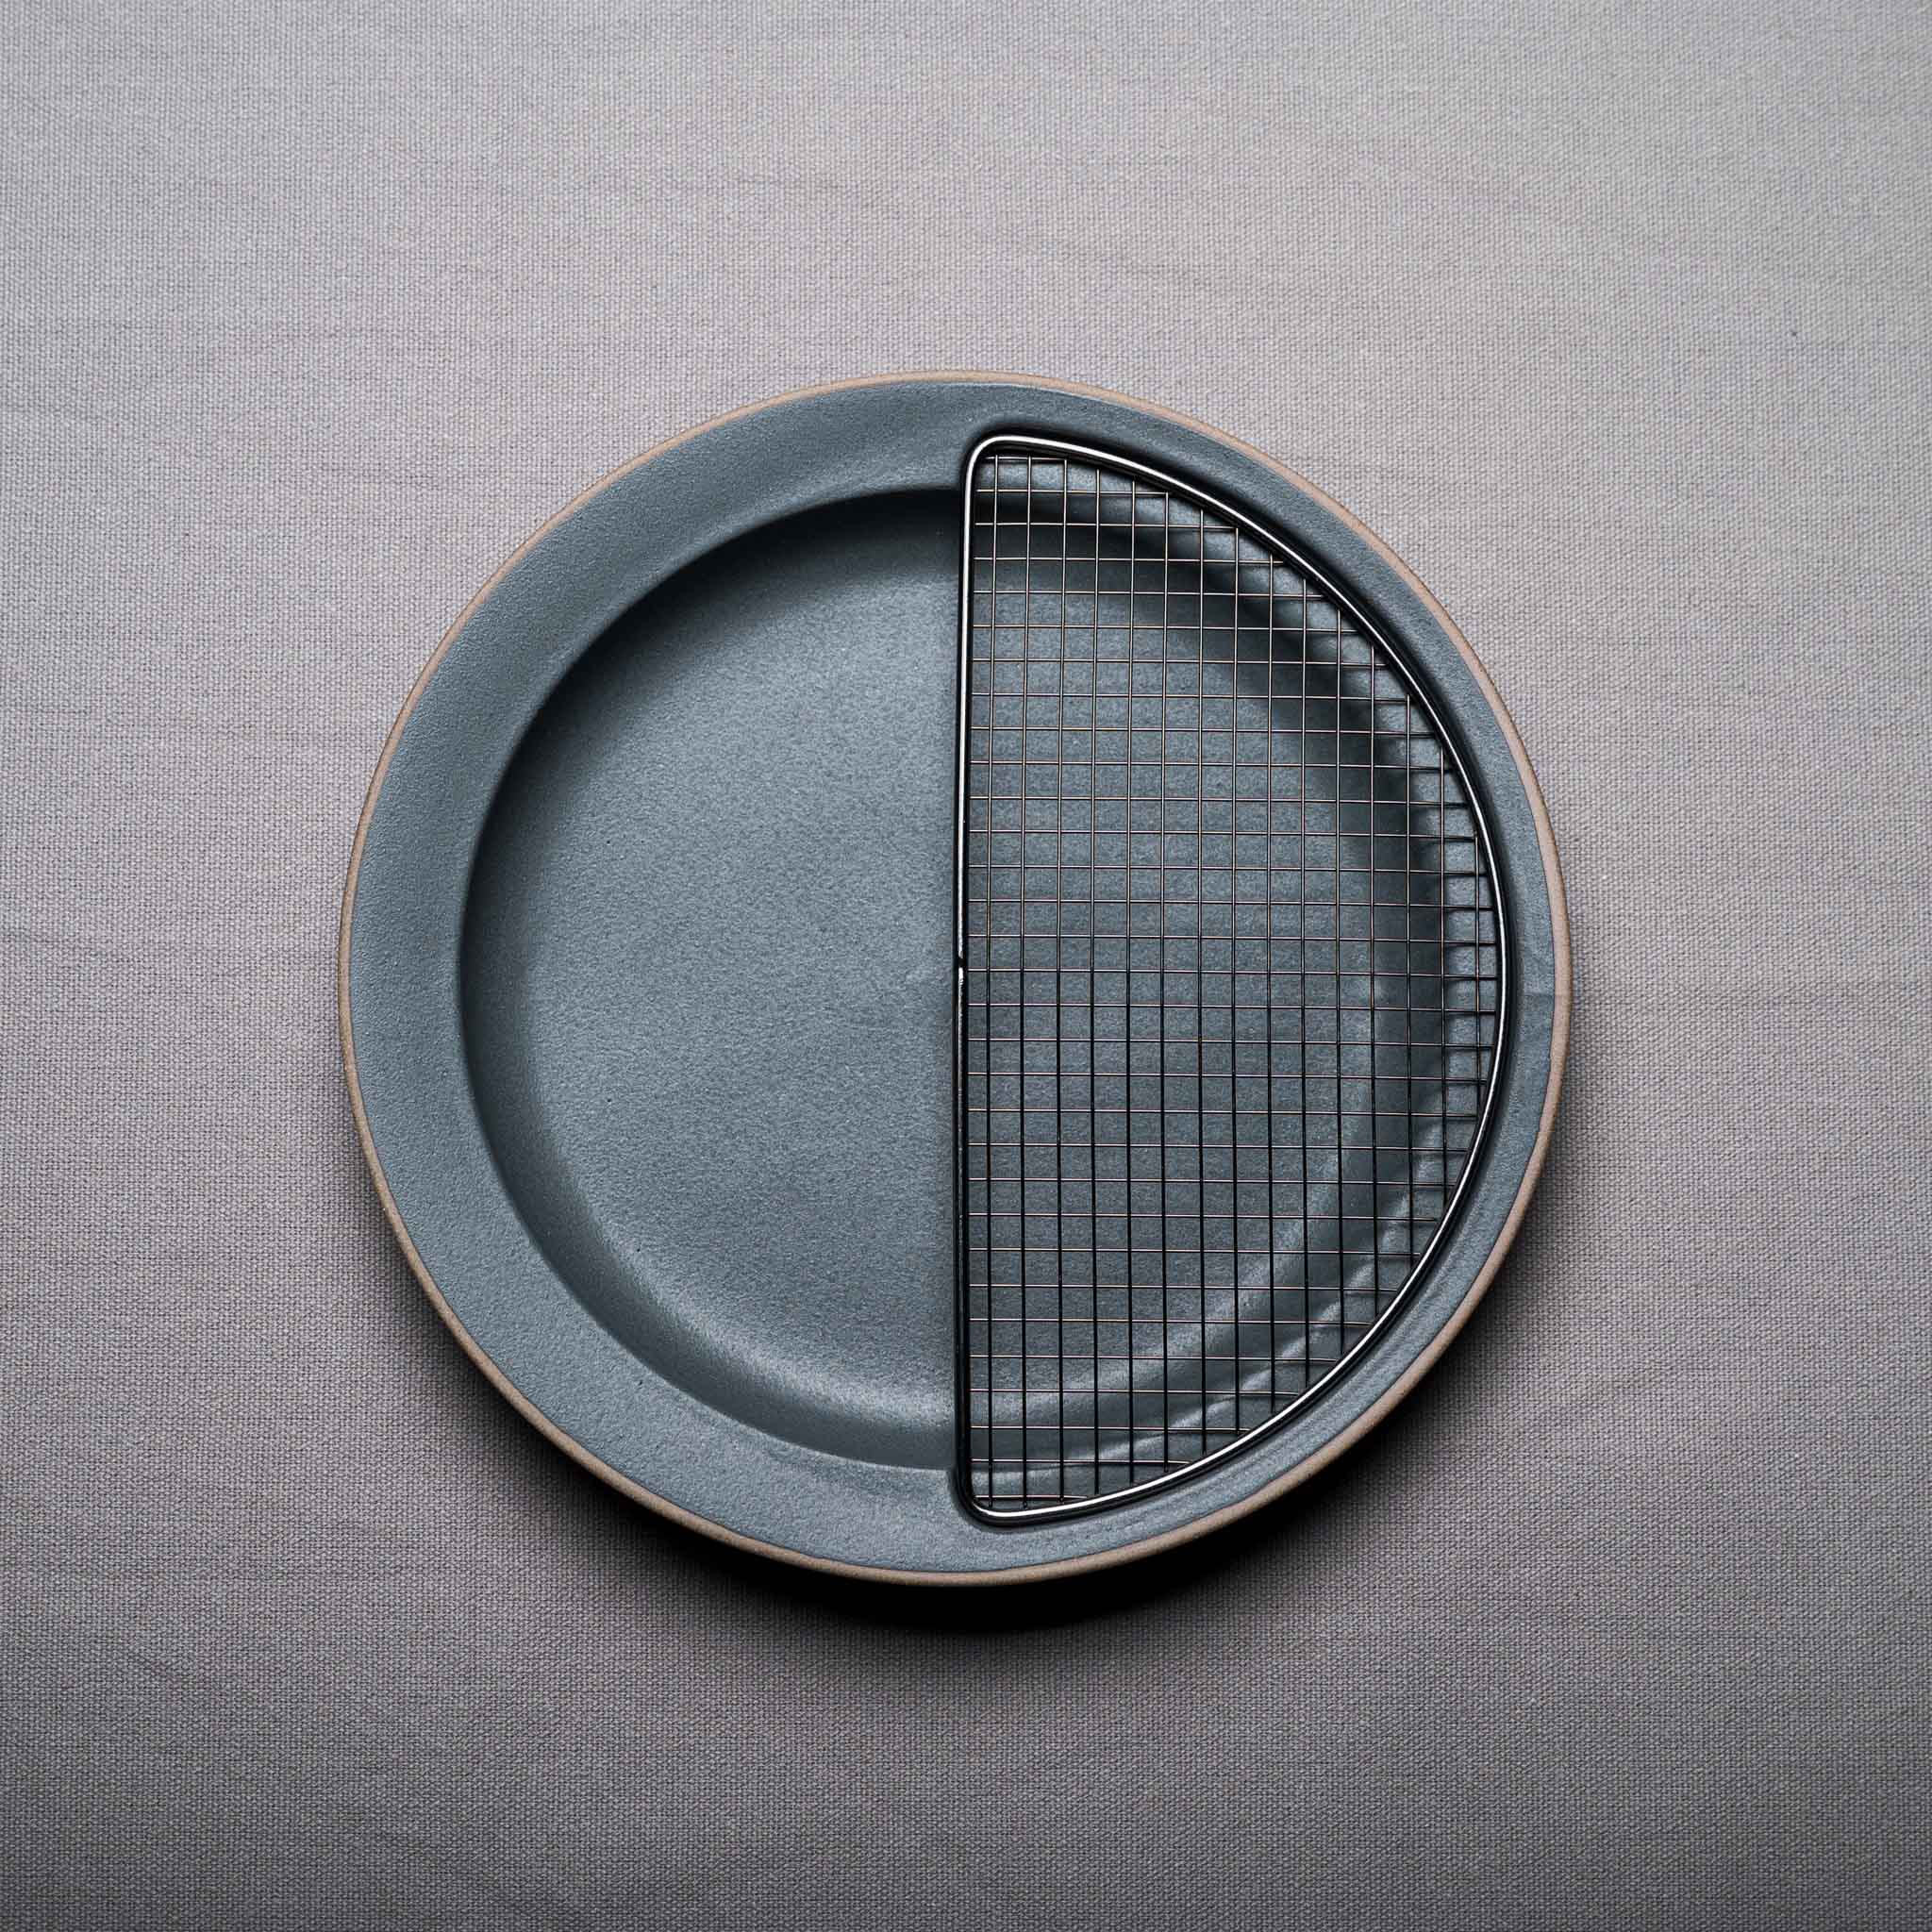 KIKIME Amime Series - With Half Black Net - 22.5 cm / Tonkatsu Plate